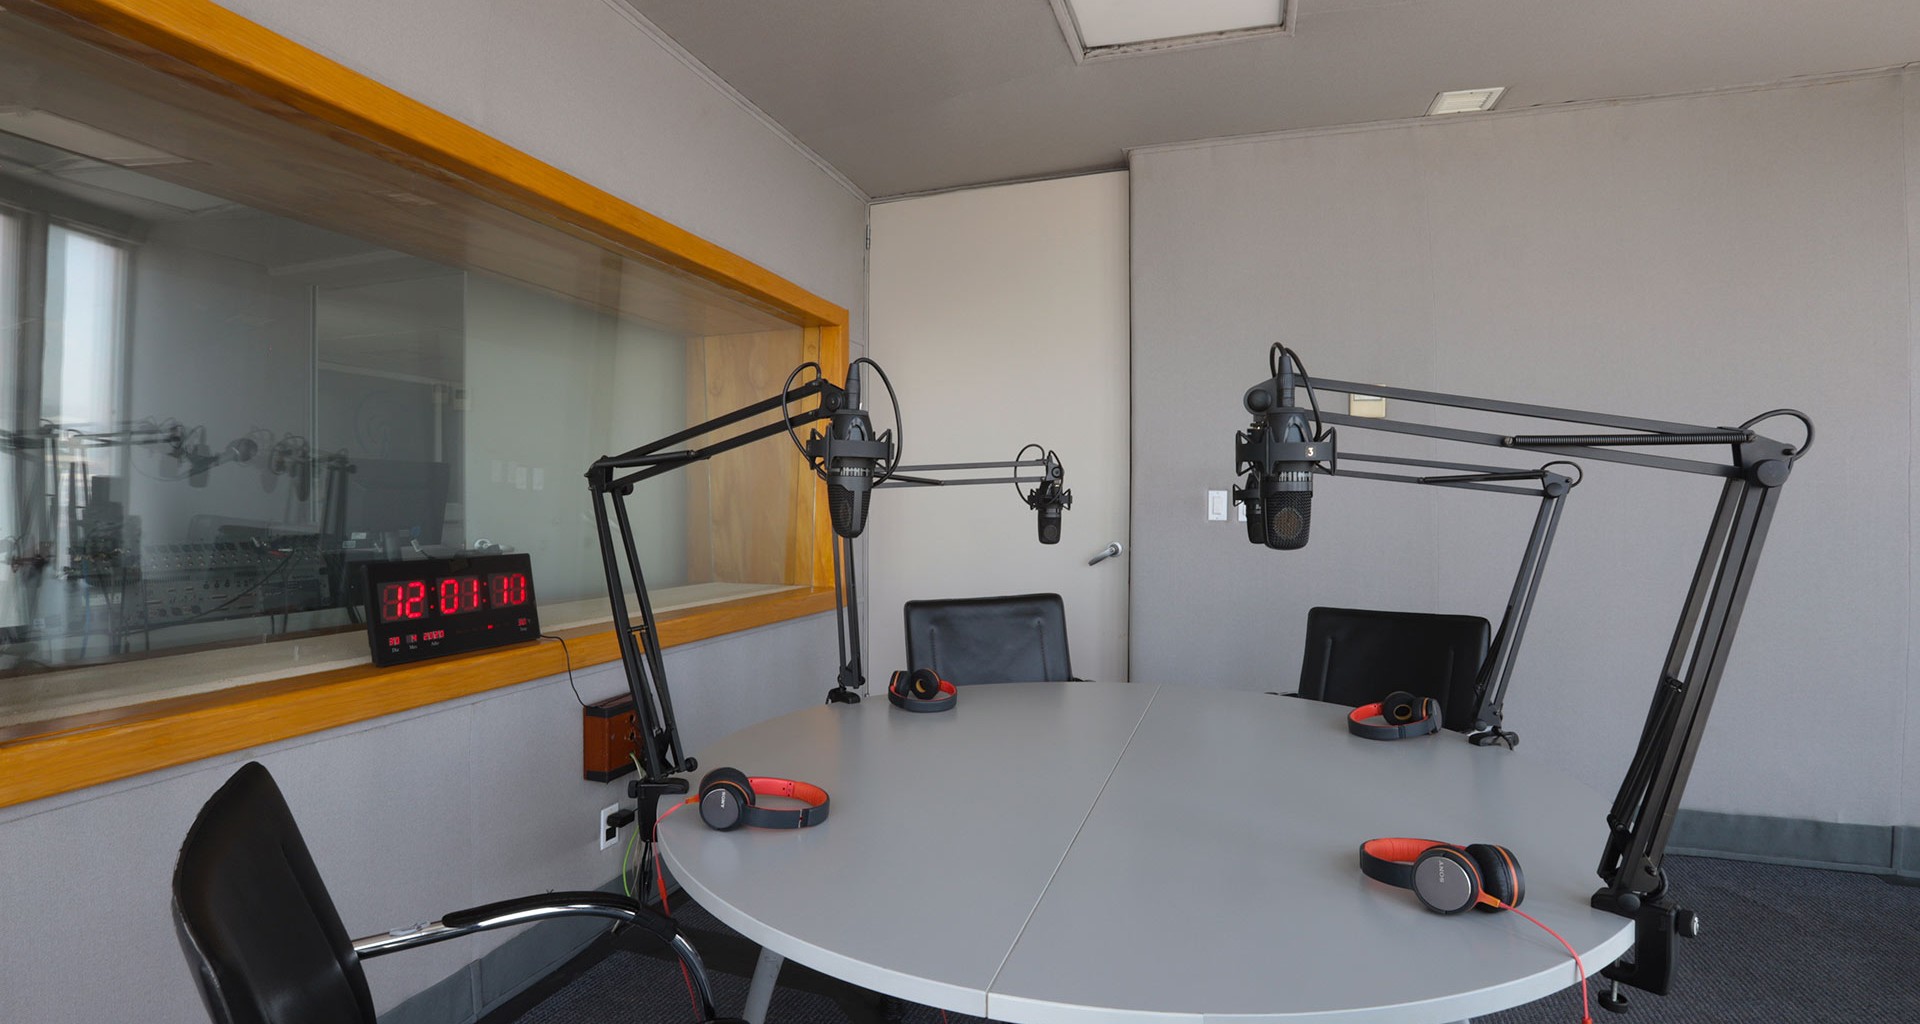 Por segundo año, estación de radio Tec se une a transmisión mundial